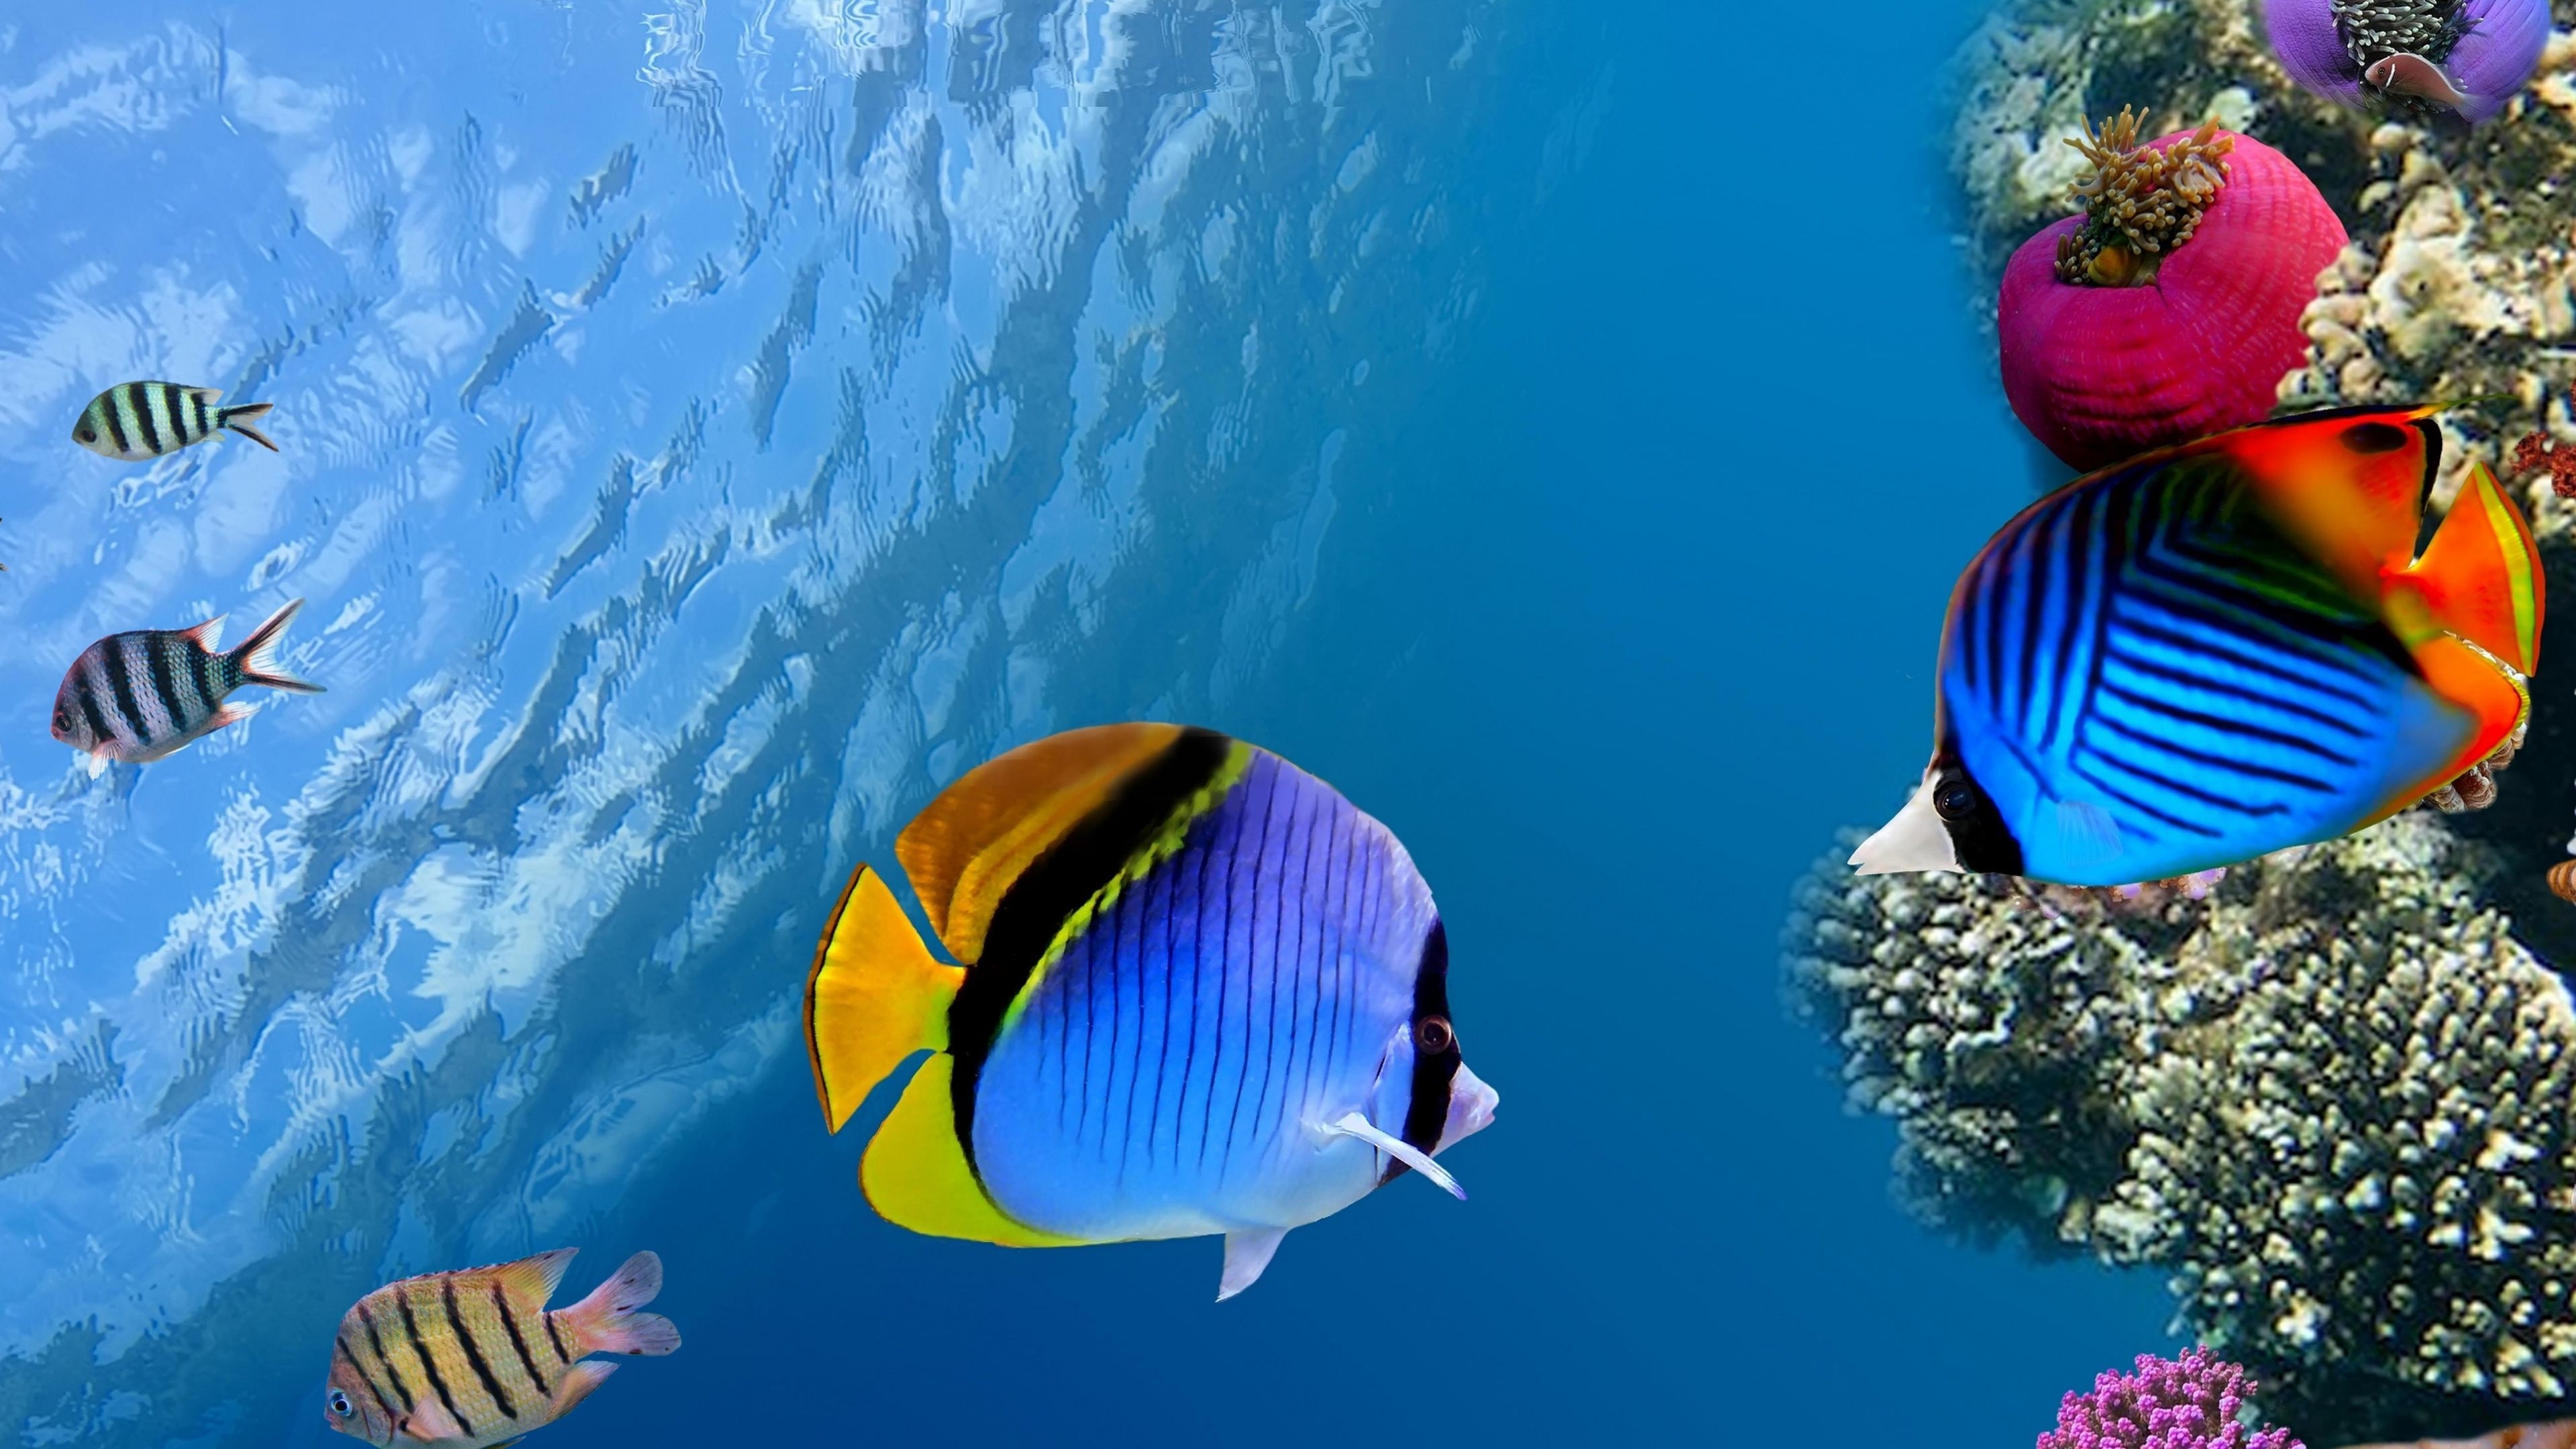 Underwater coral fish wallpaper, 4K Ultra HD background, Marine life beauty, Captivating oceanic scene, 3840x2160 4K Desktop